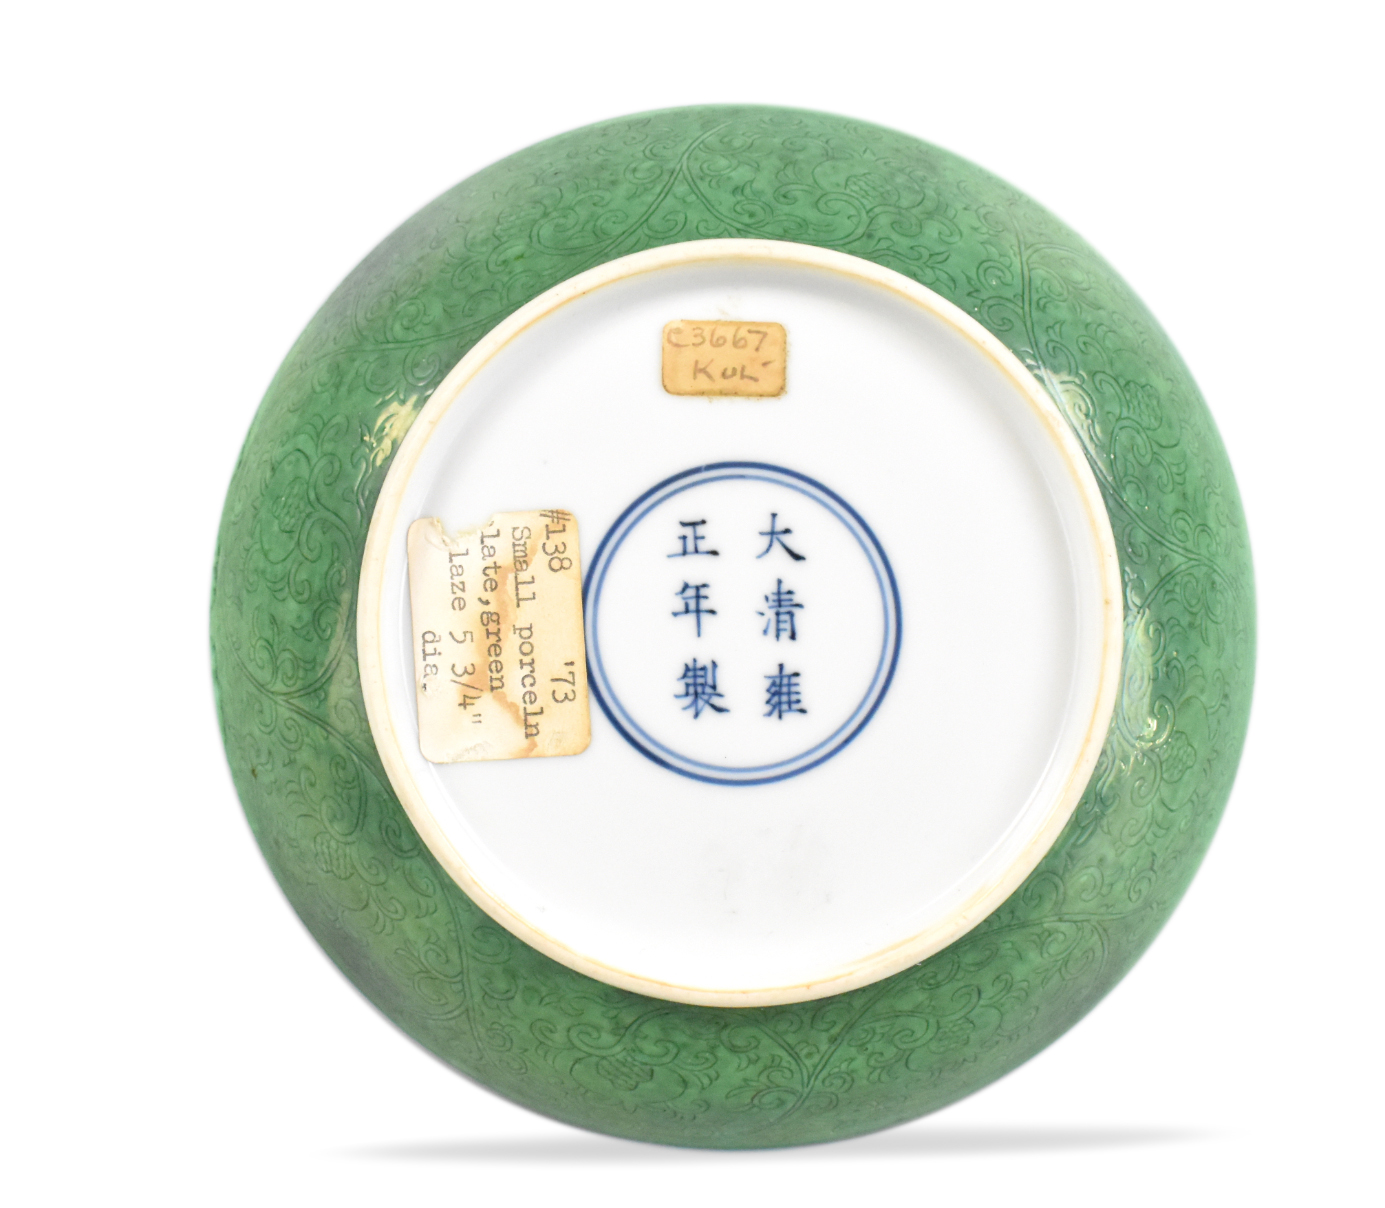 CHINESE IMPERIAL GREEN GLAZE DISH YONGZHENG 33a30f